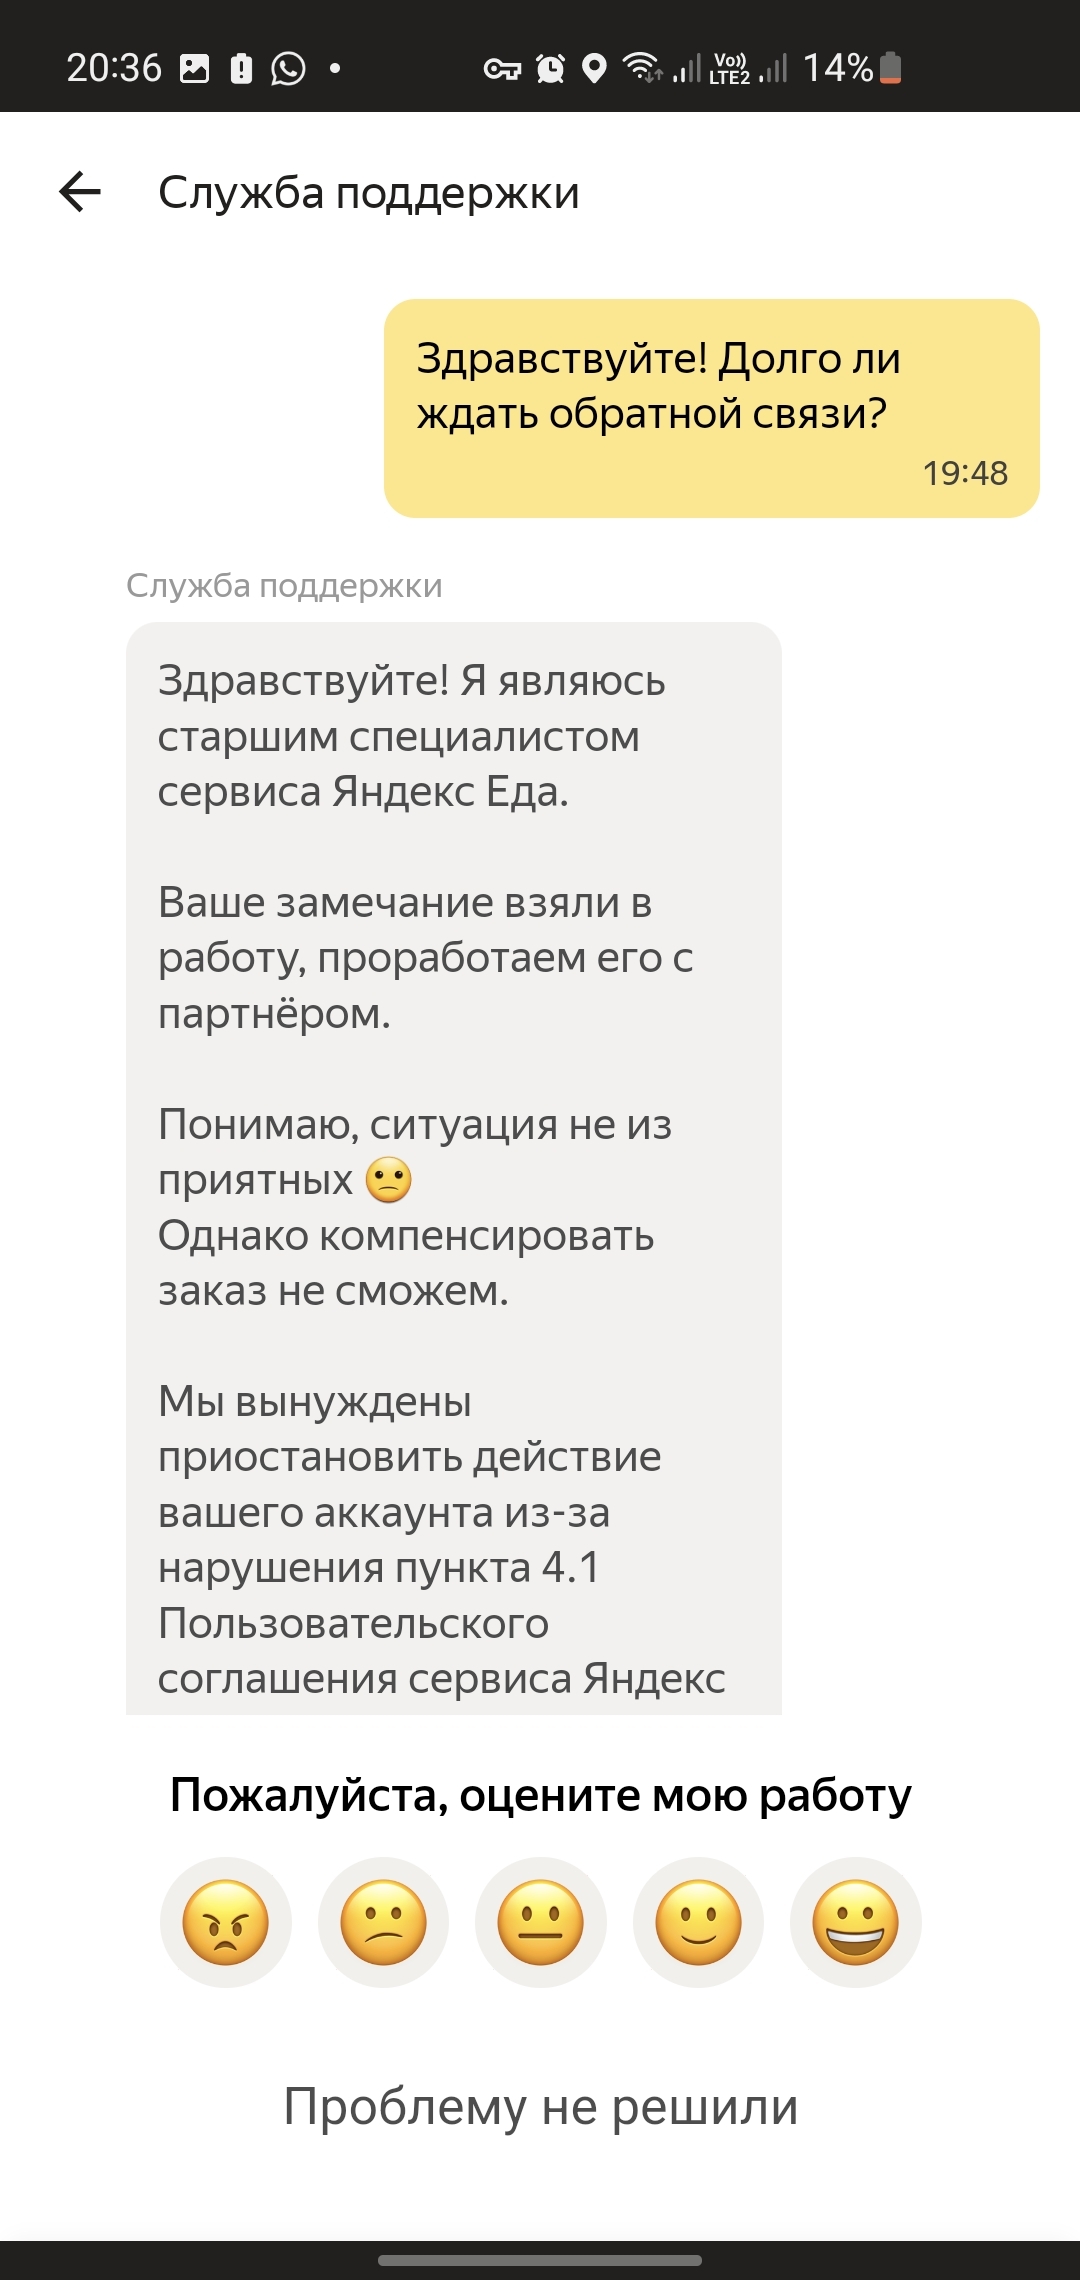 Яндекс Еда - лучший сервис